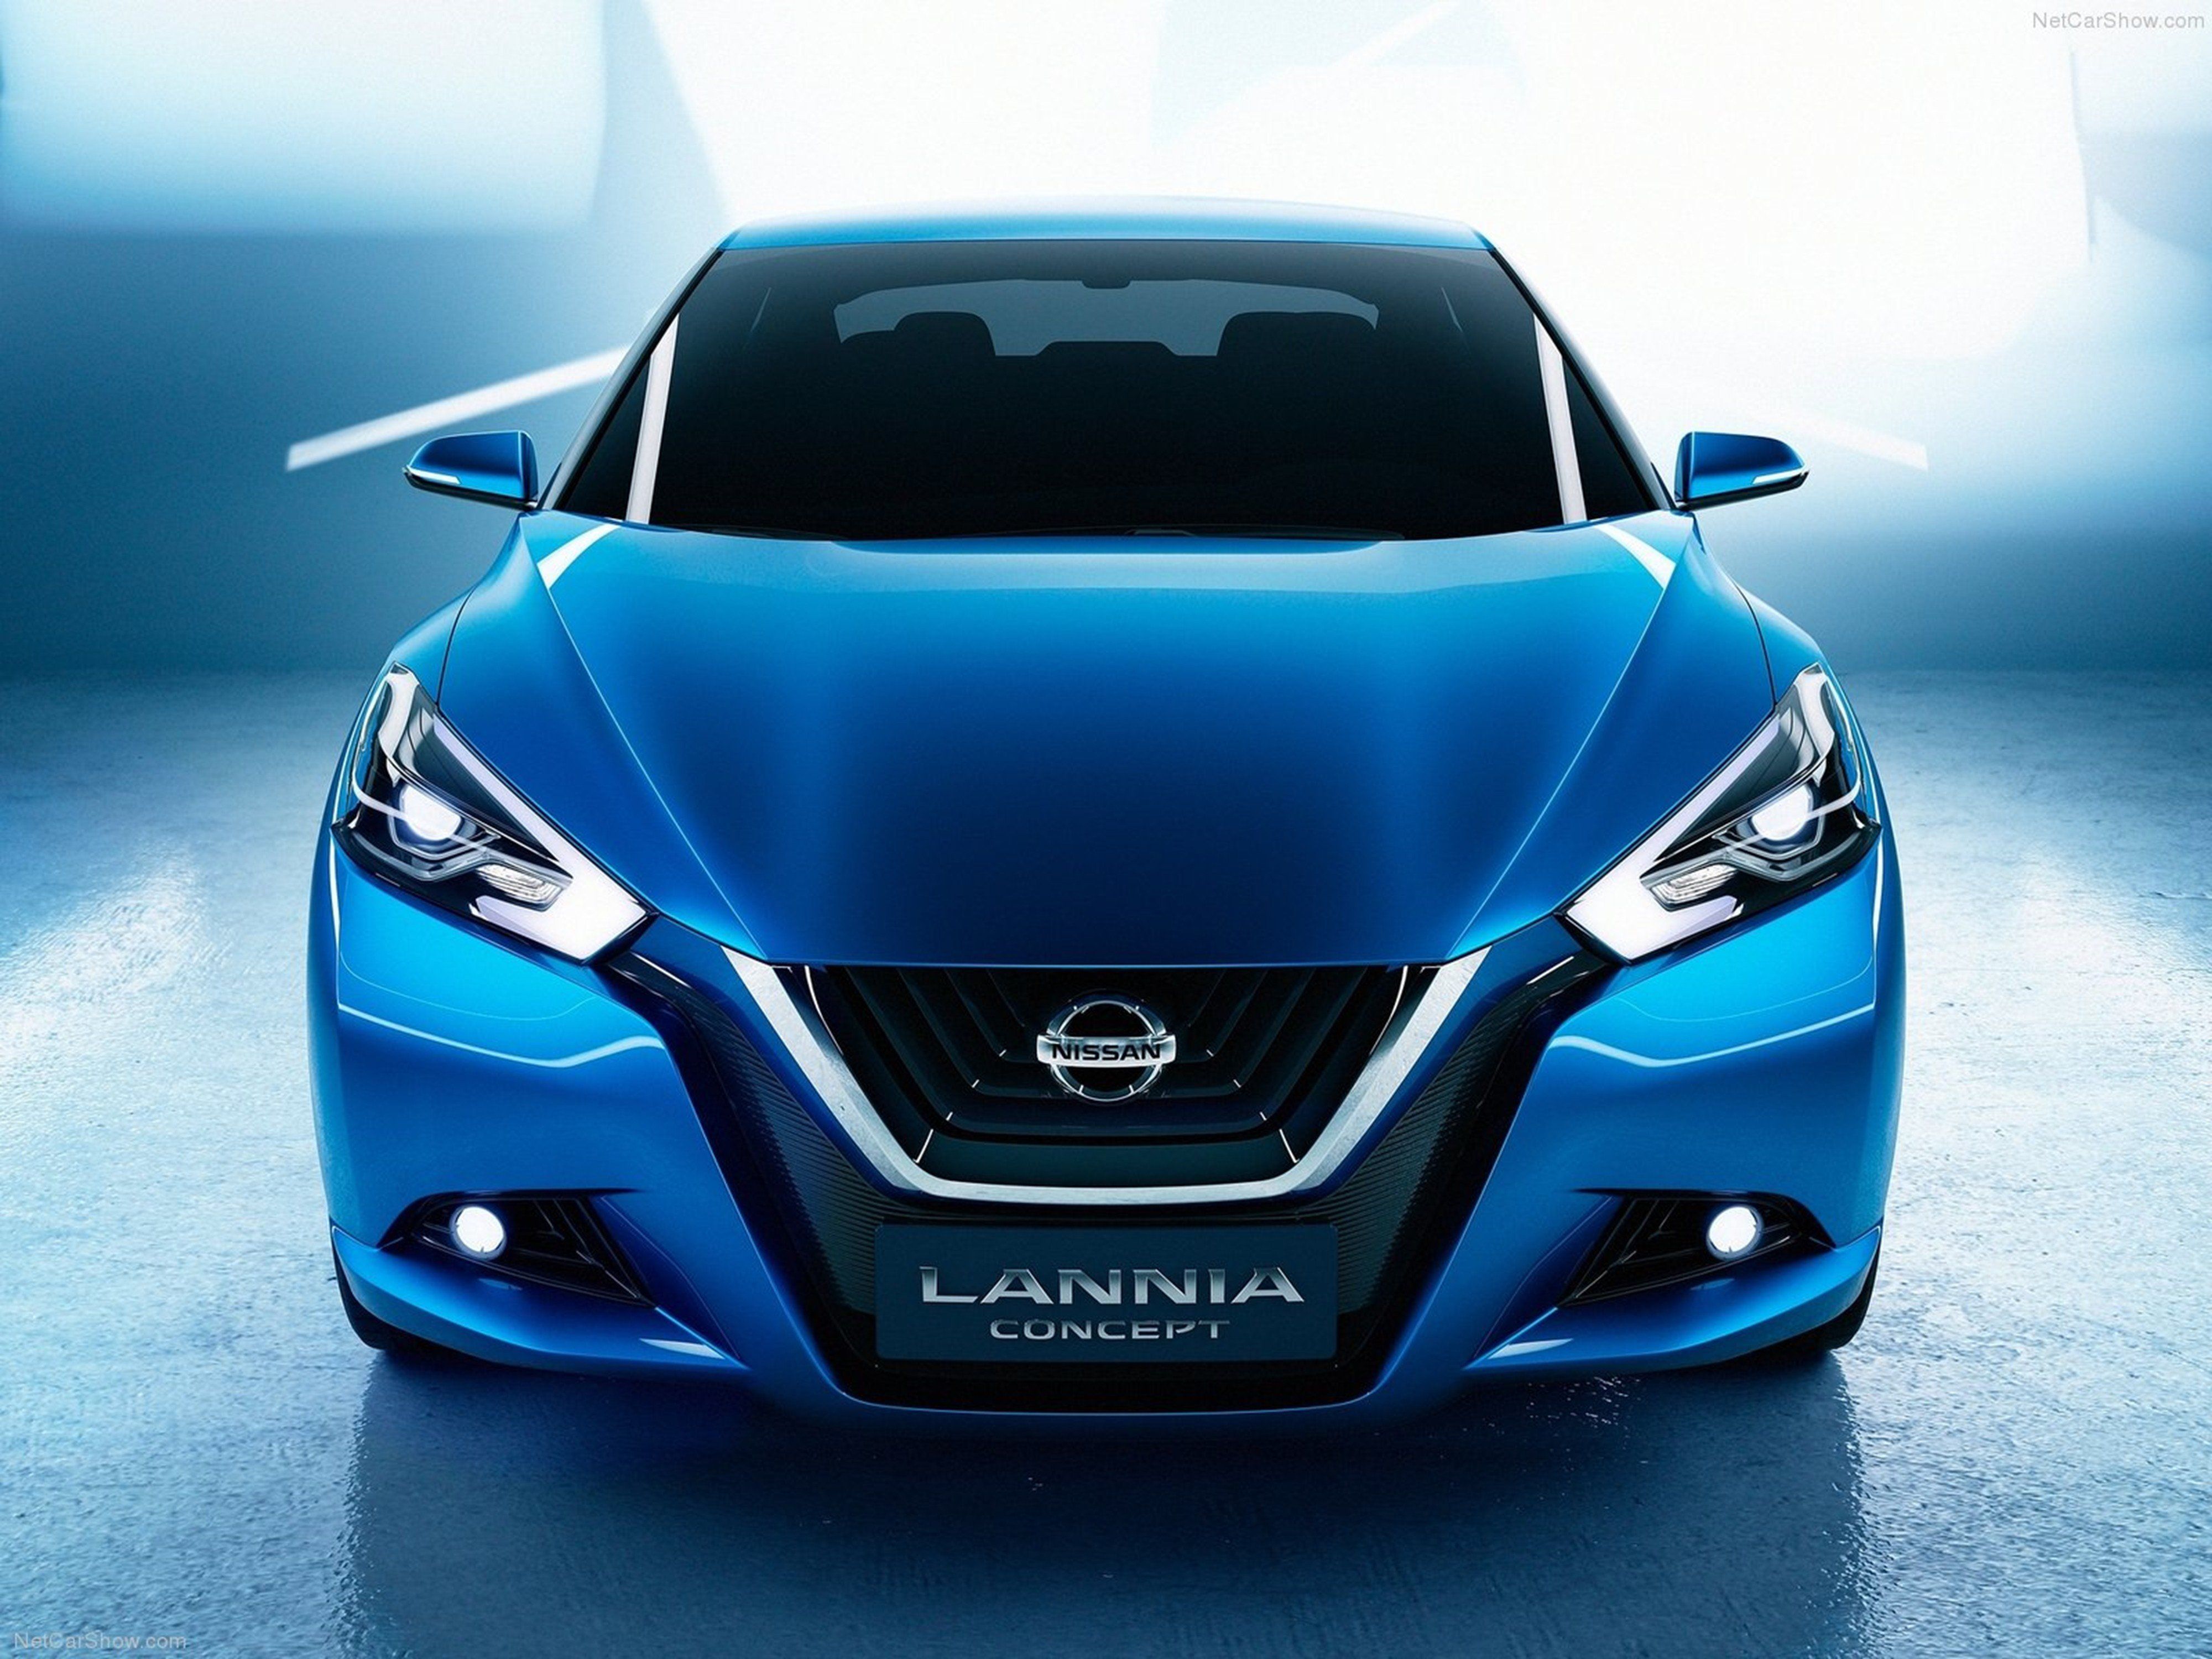 Nissan Lannia Concept 2014 wallpaper 1c 4000x3000 wallpaper ...